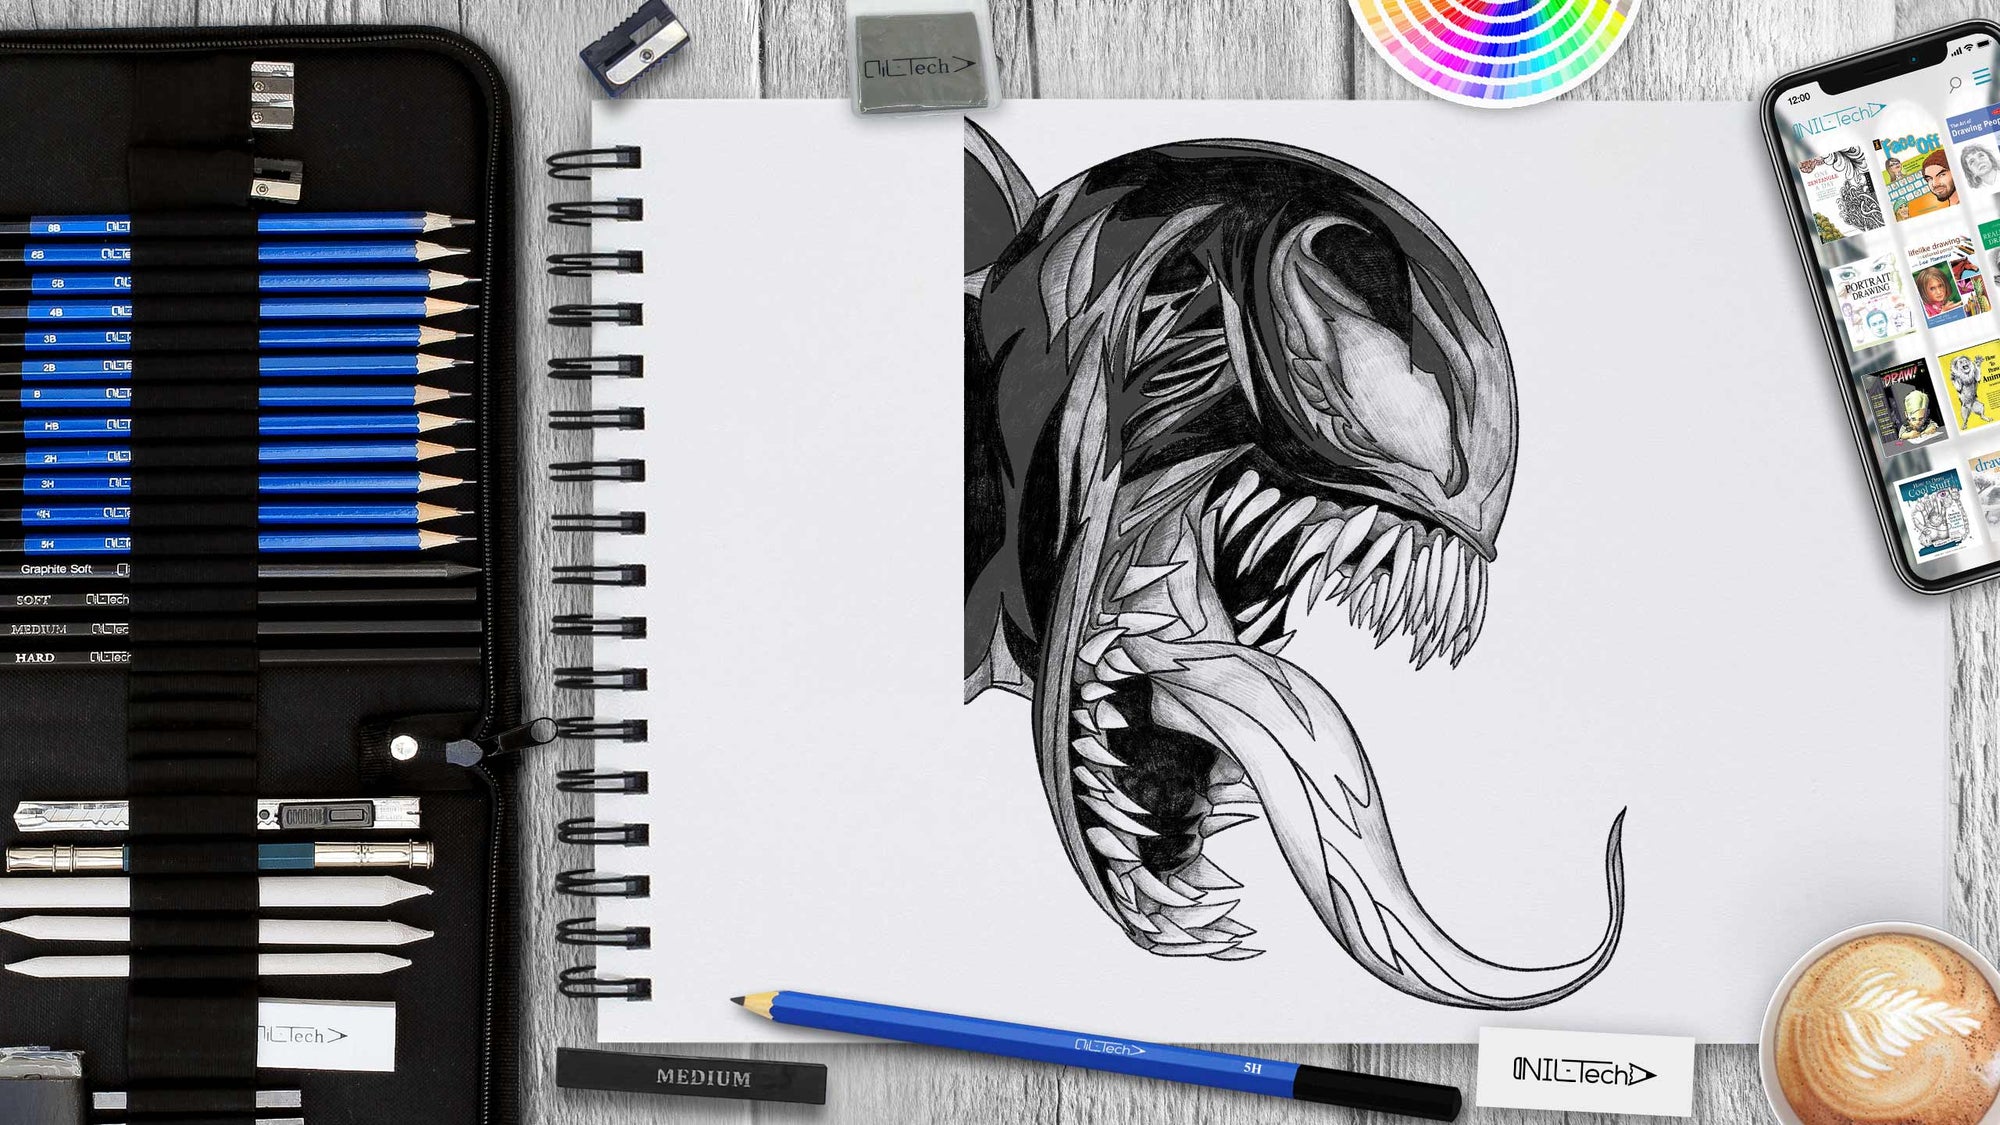 Venom head drawing by TheInternetover9000 on Newgrounds